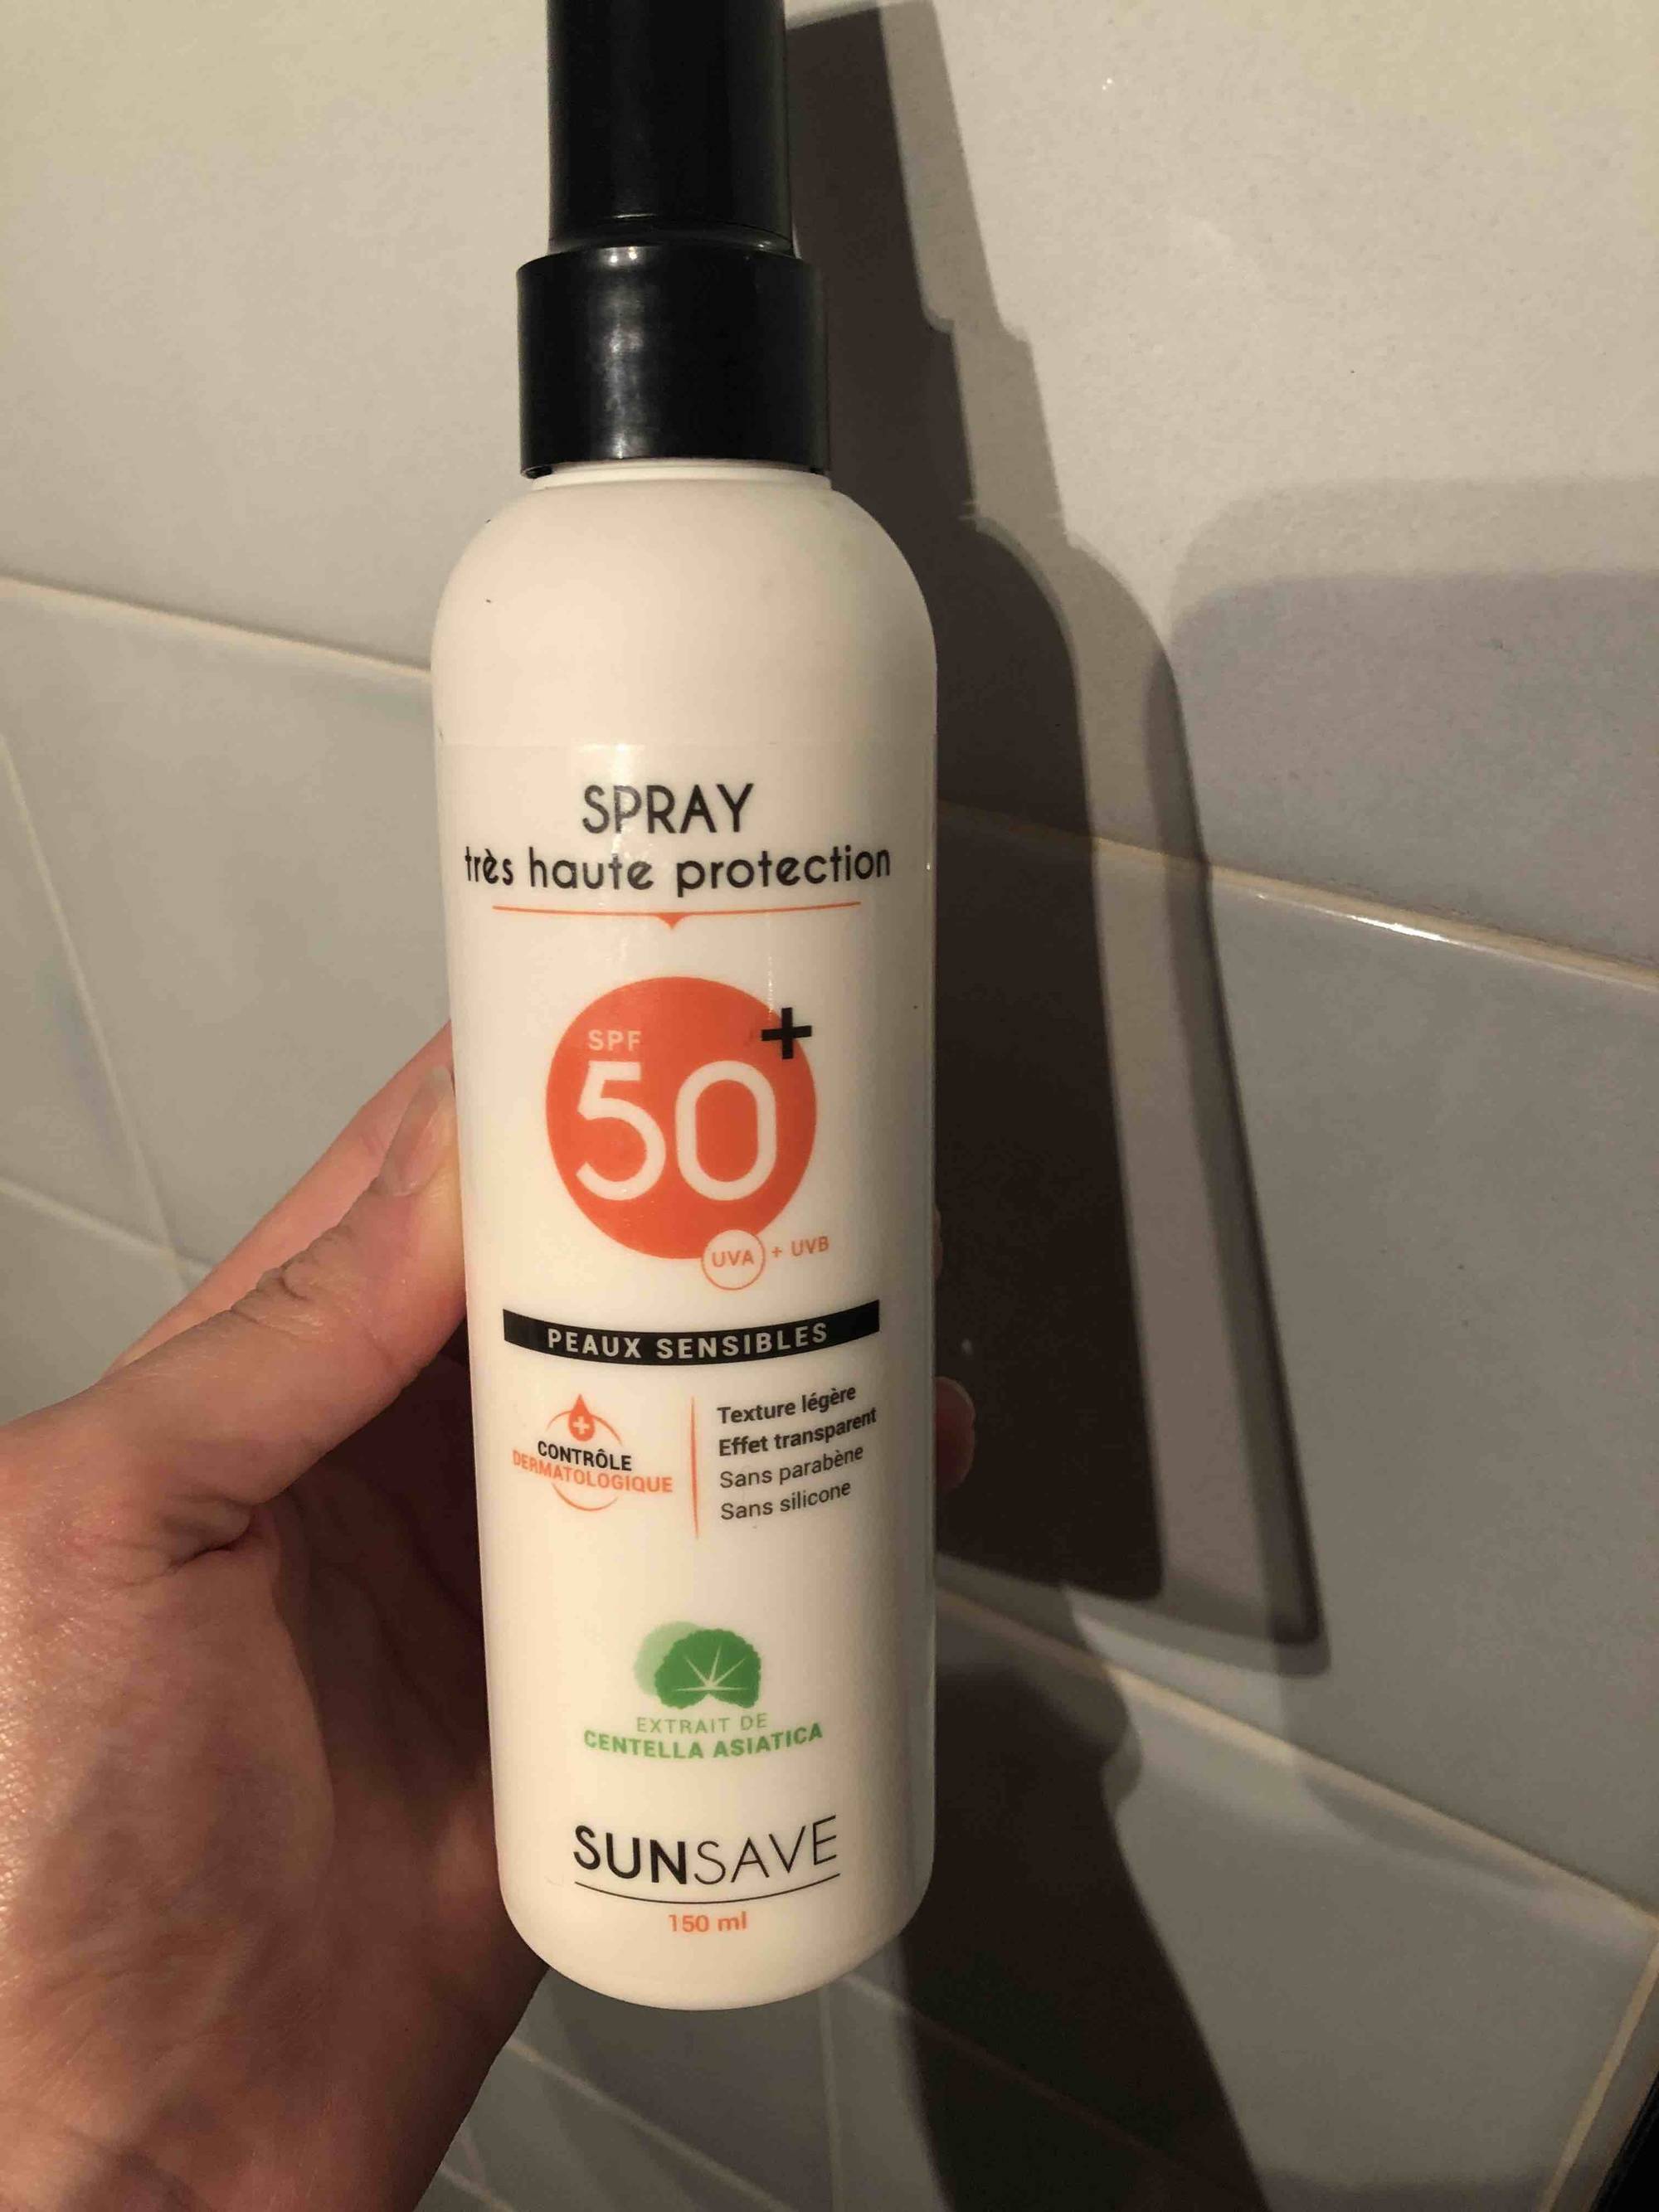 SUNSAVE - Spray très haute protection spf 50+